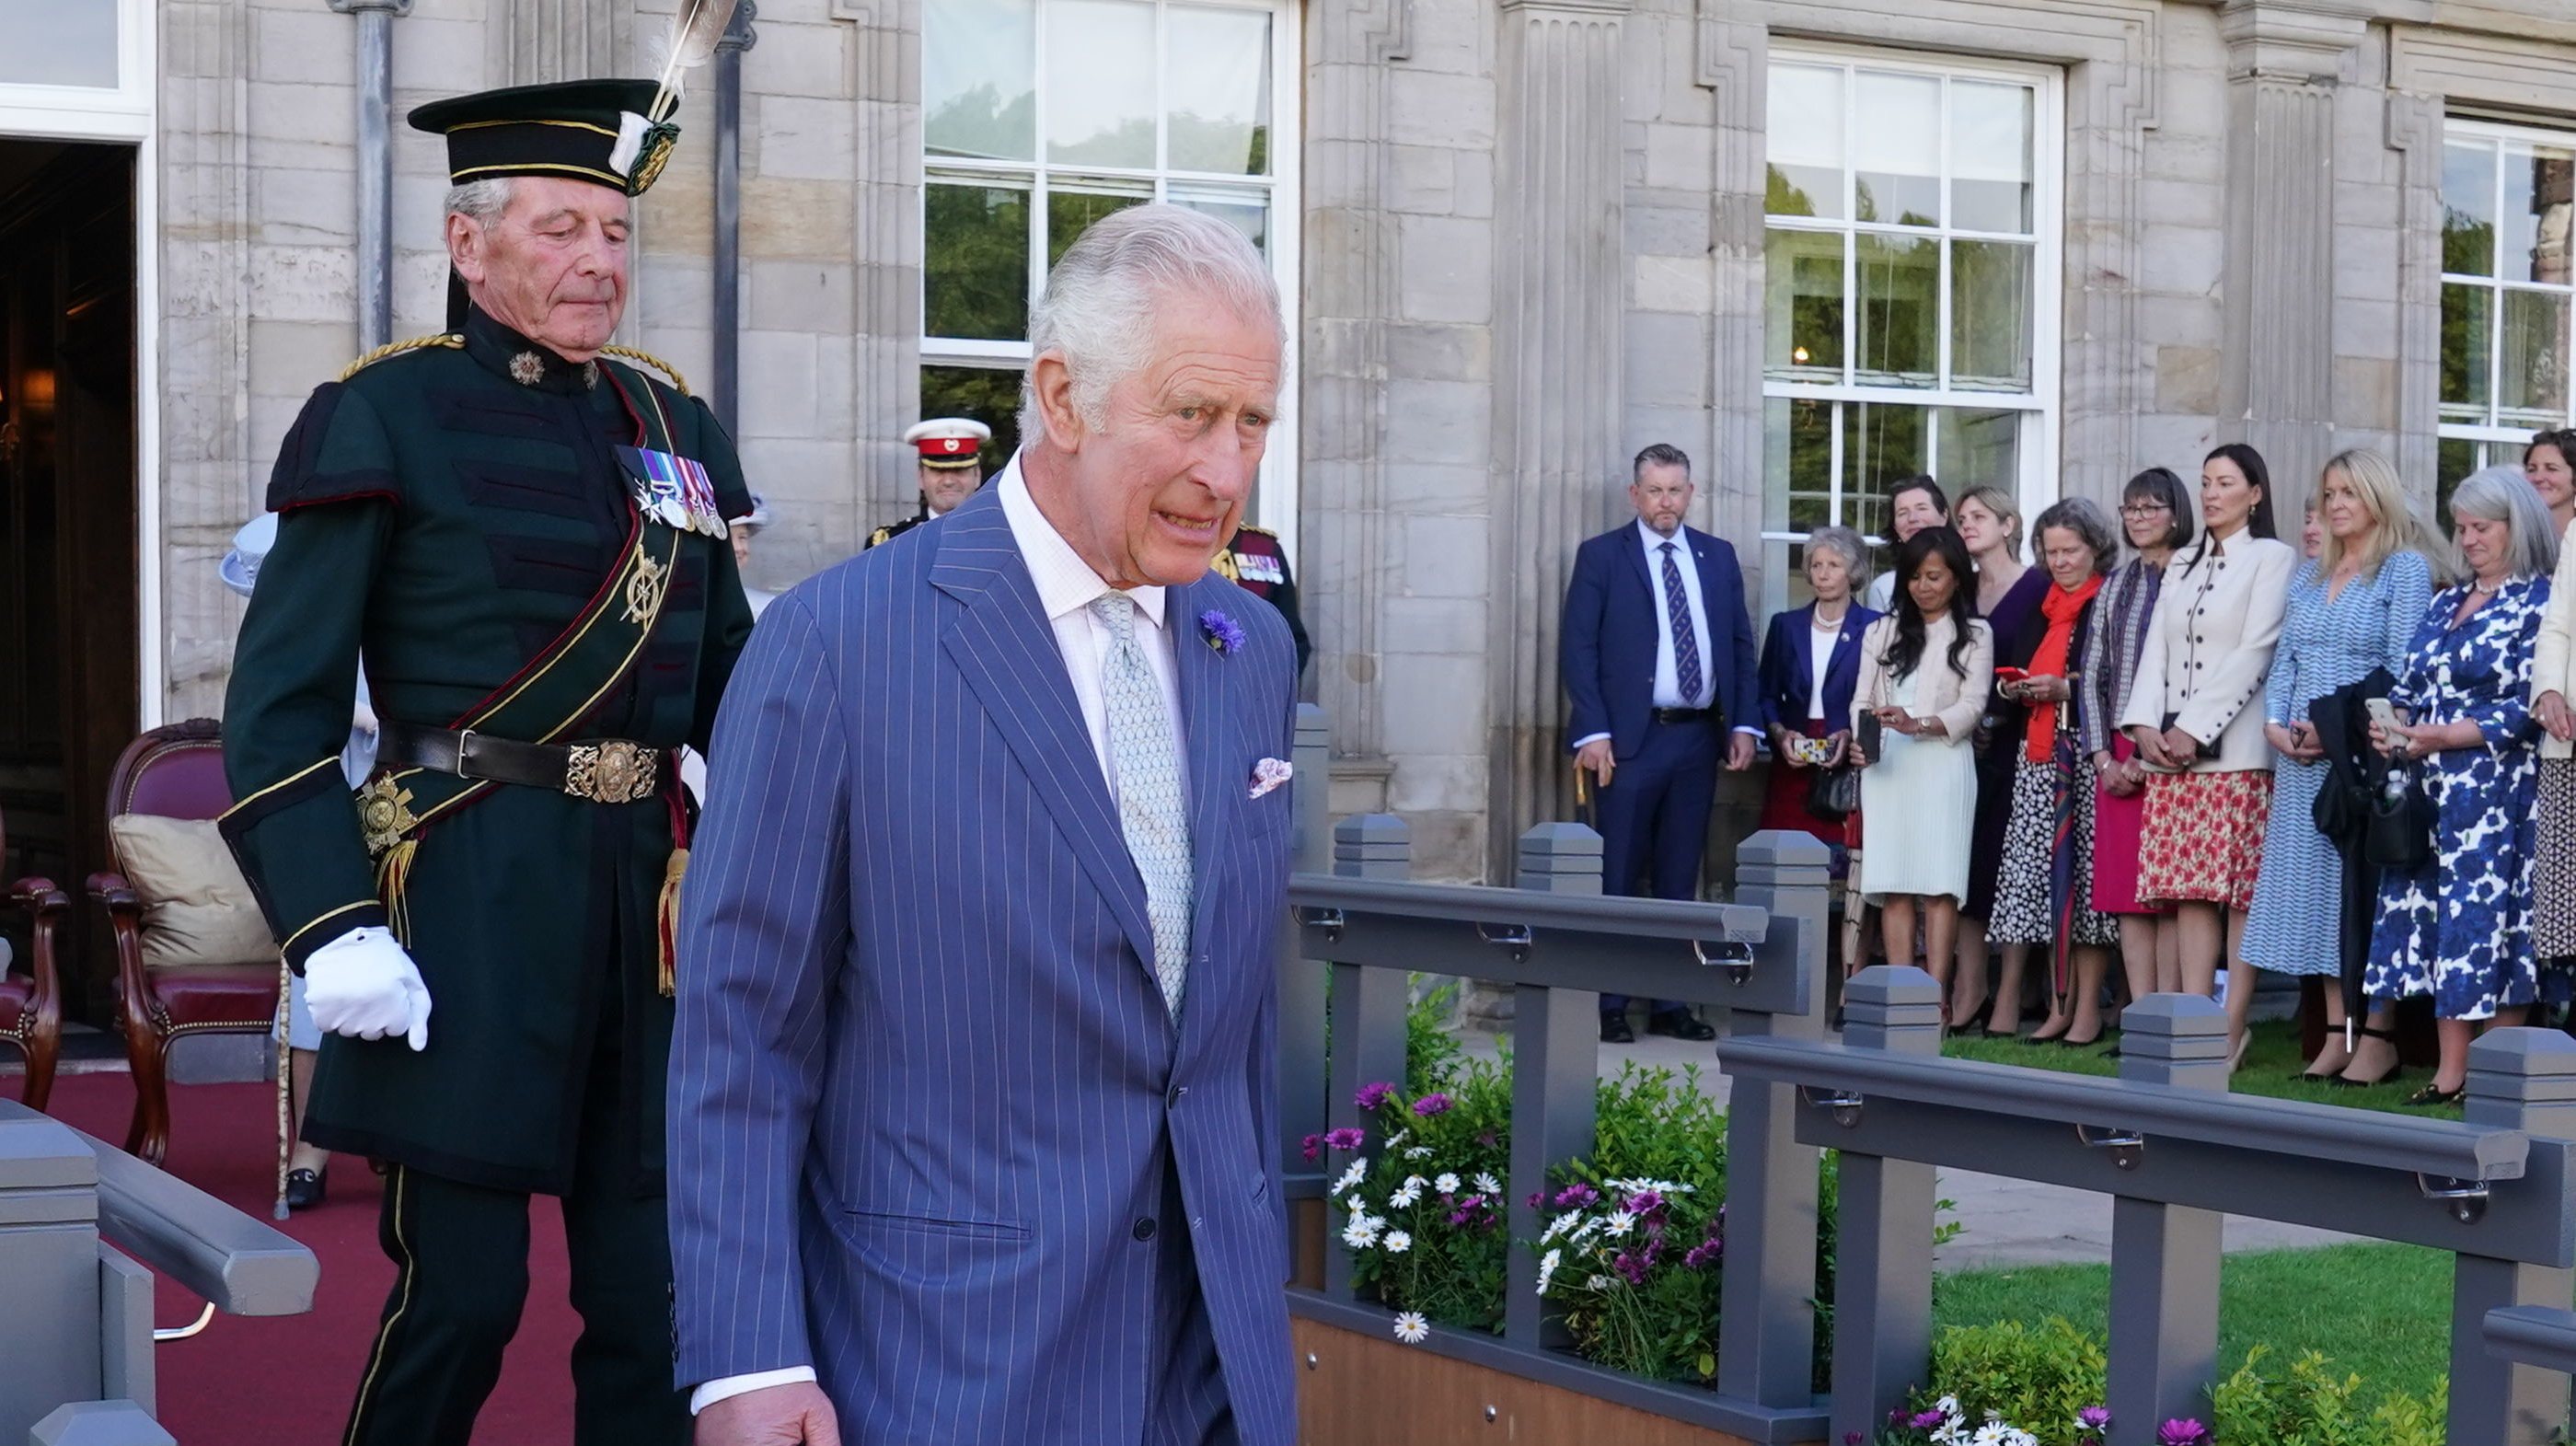 The Royal Family Visit Scotland - The Queen&#039;s Body Guard For Scotland Reddendo Parade